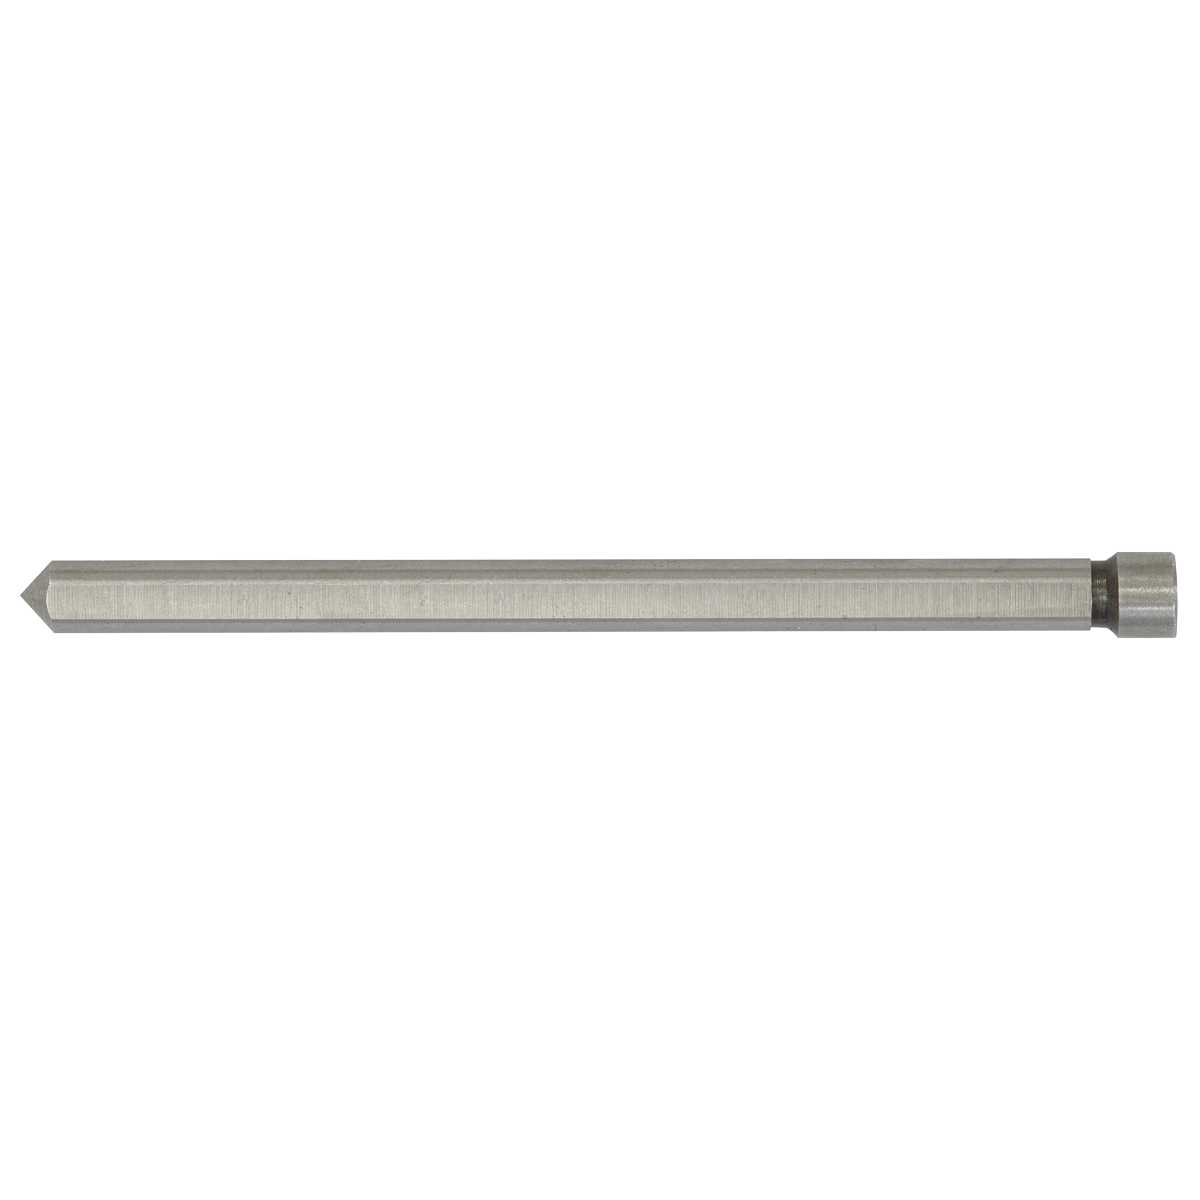 Sealey WRBLP Long Straight Pin Pilot Rod 102mm